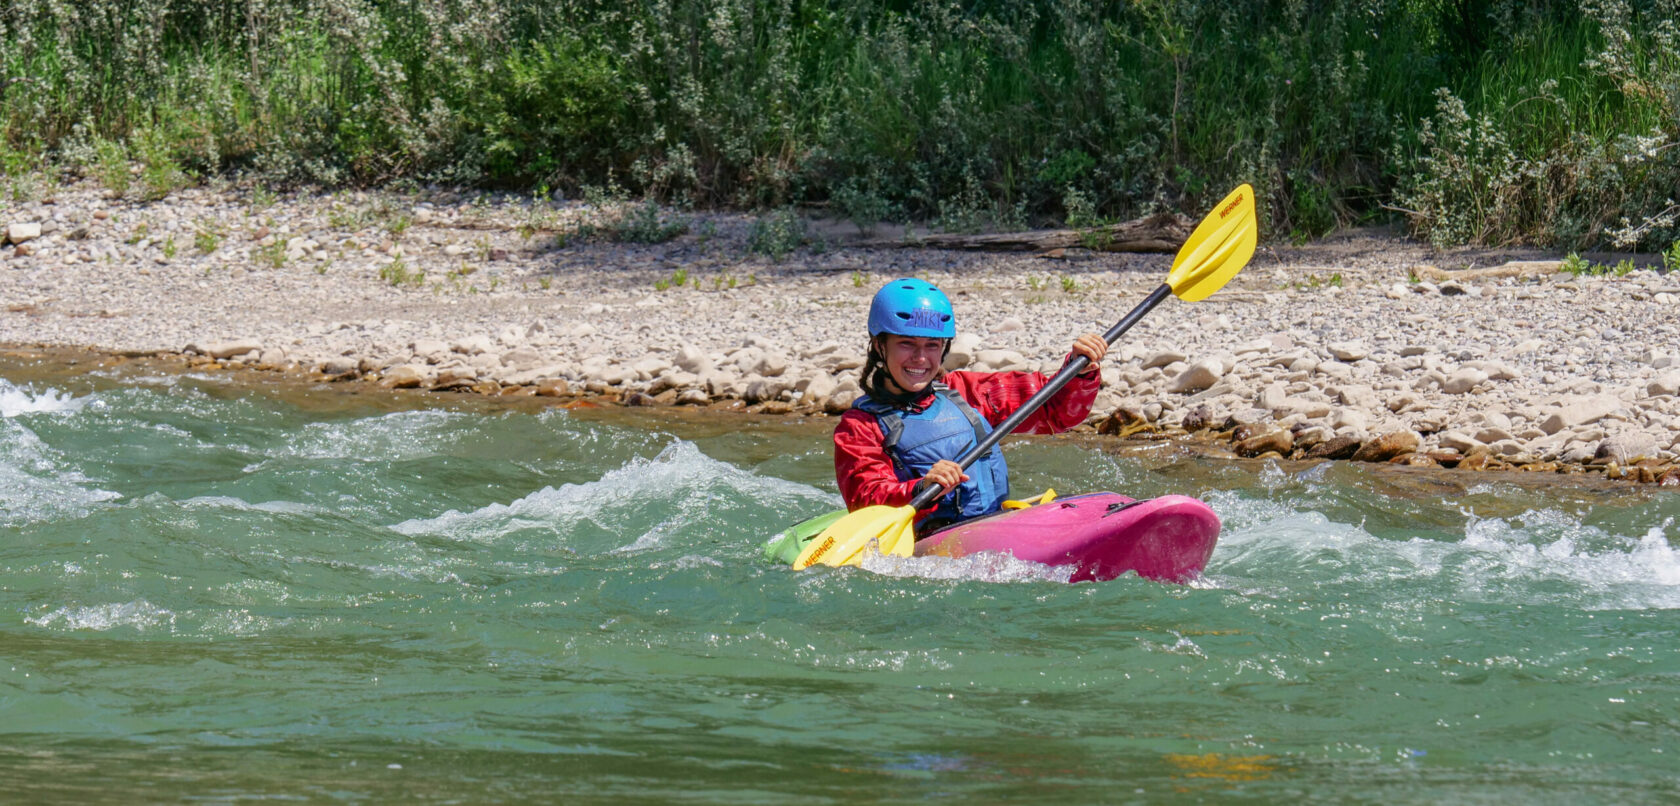 smiles while whitewater kayaking on the snake river